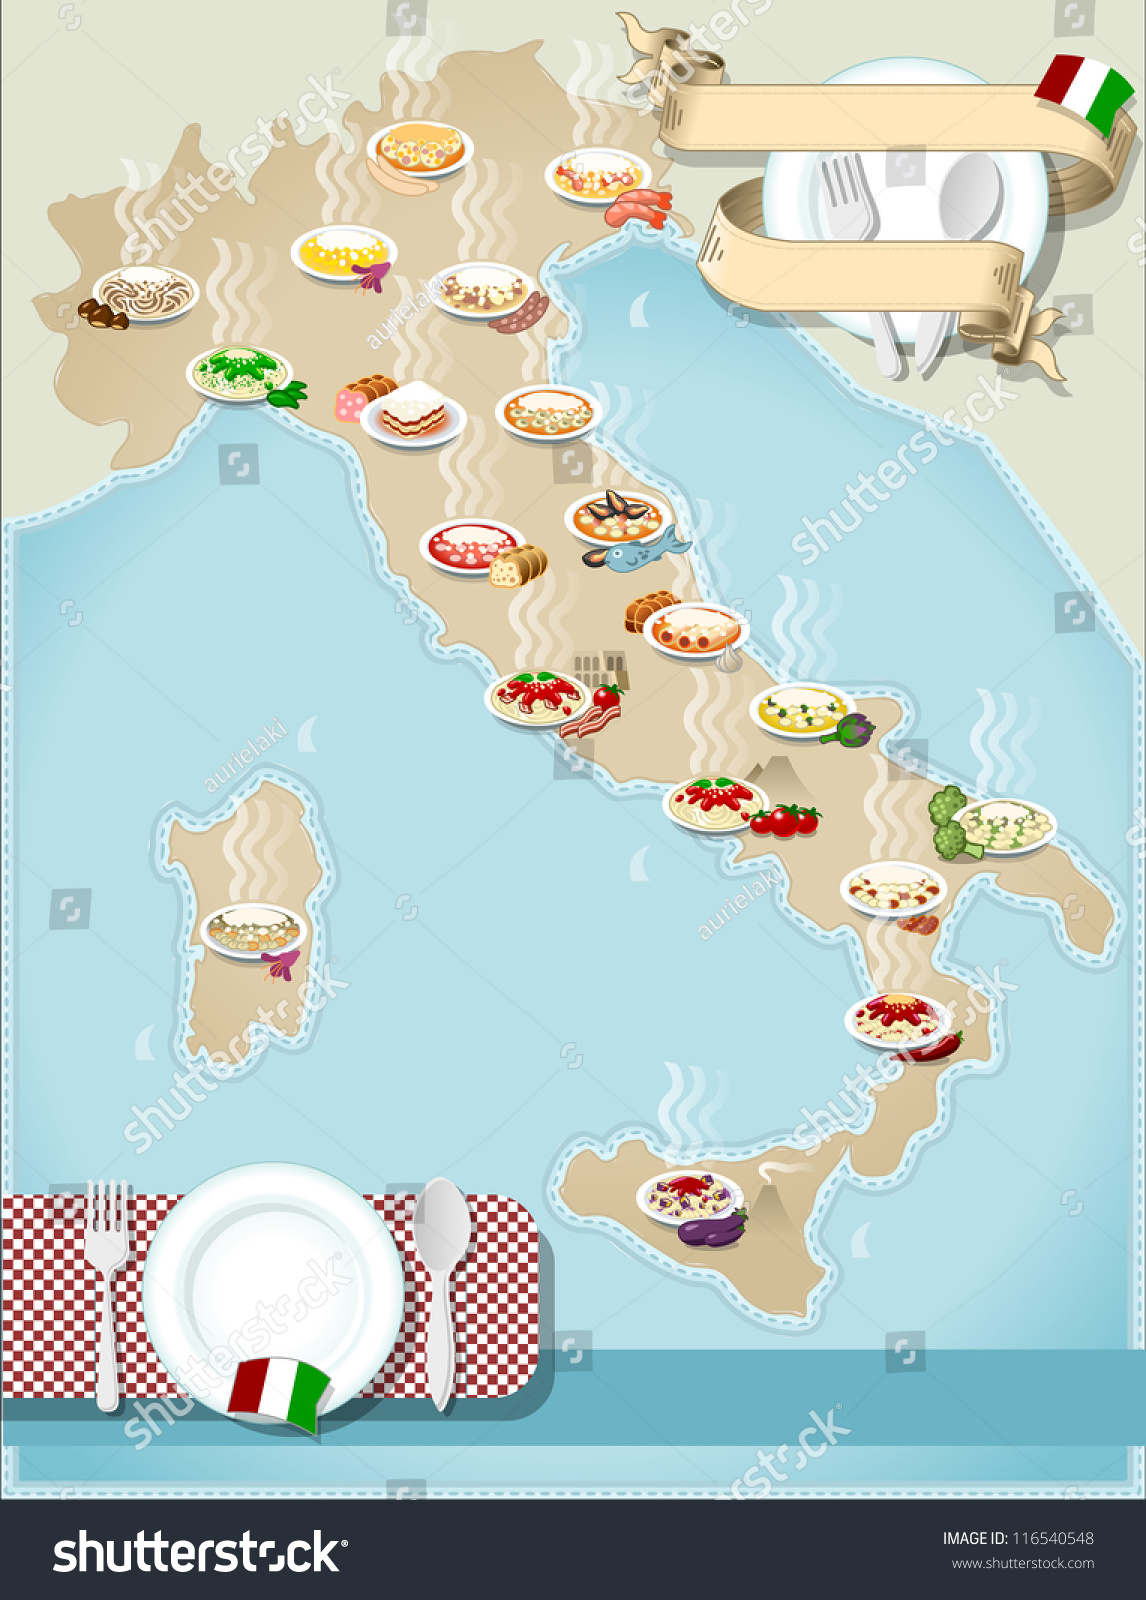 Italy Food Pasta Map Cook Food Stock Vector 116540548 - Shutterstock